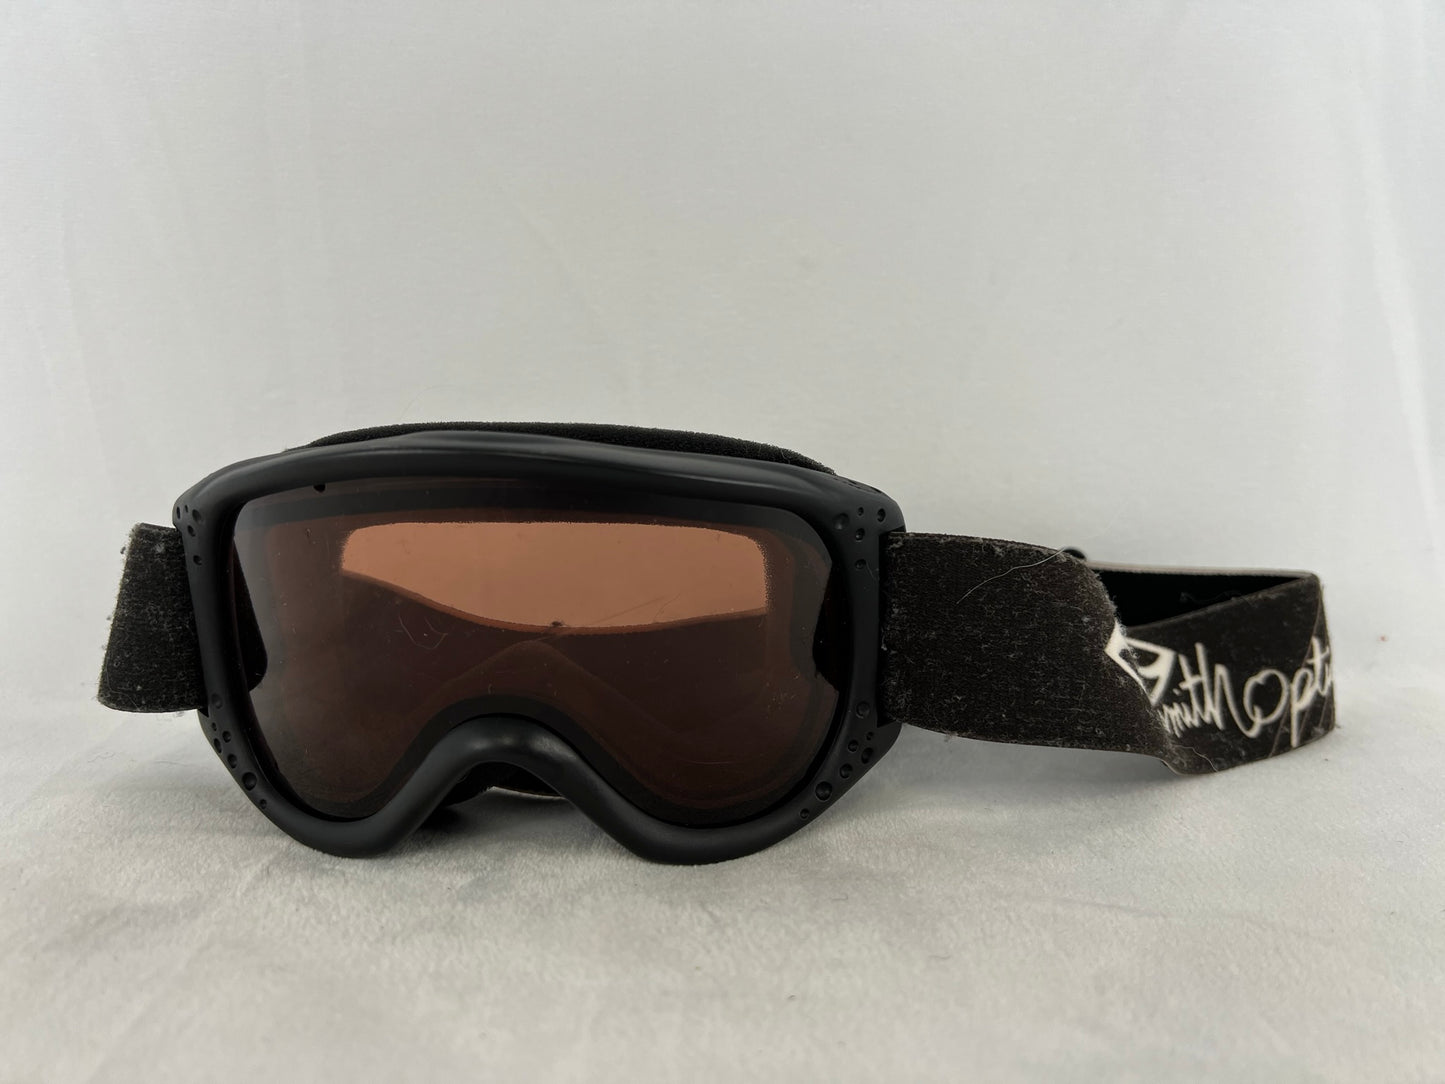 Ski Goggles Child Size 4-6 Simth Optics Black White Orange Lenses Excellent